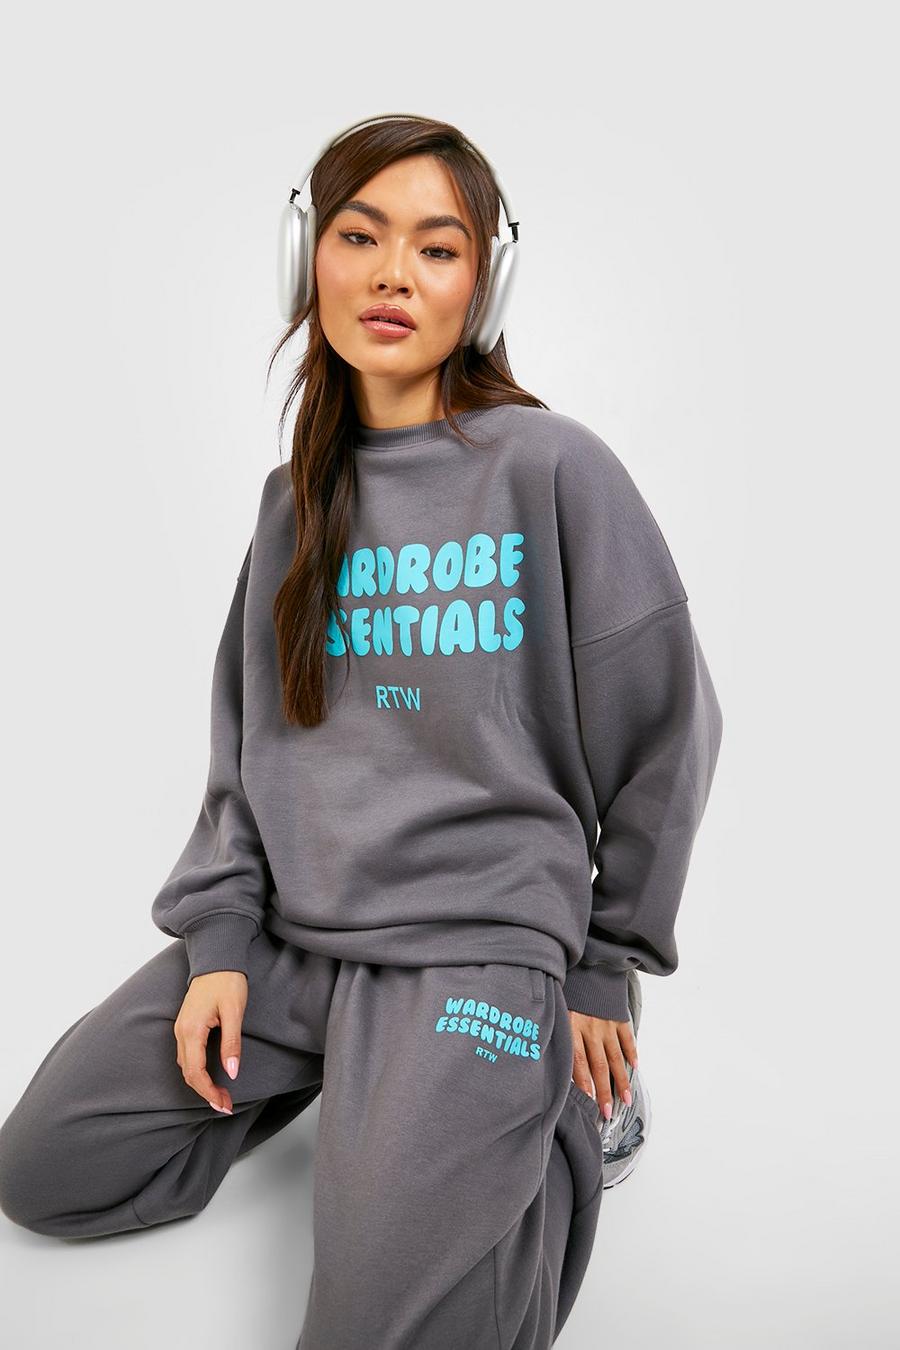 Super Oversize Sweatshirt-Trainingsanzug mit Wardrobe Essentials Print, Charcoal grey